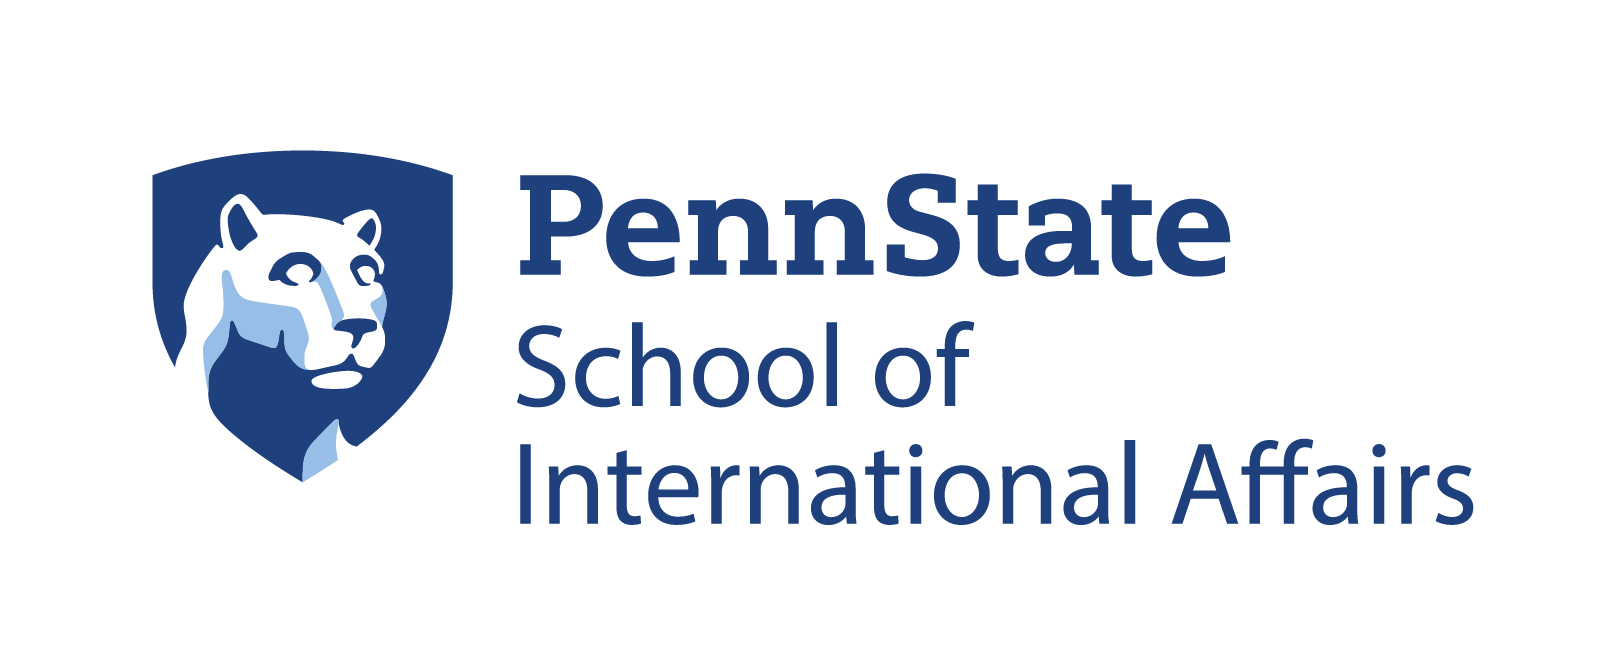 Why Penn State SIA - Penn State School of International Affairs